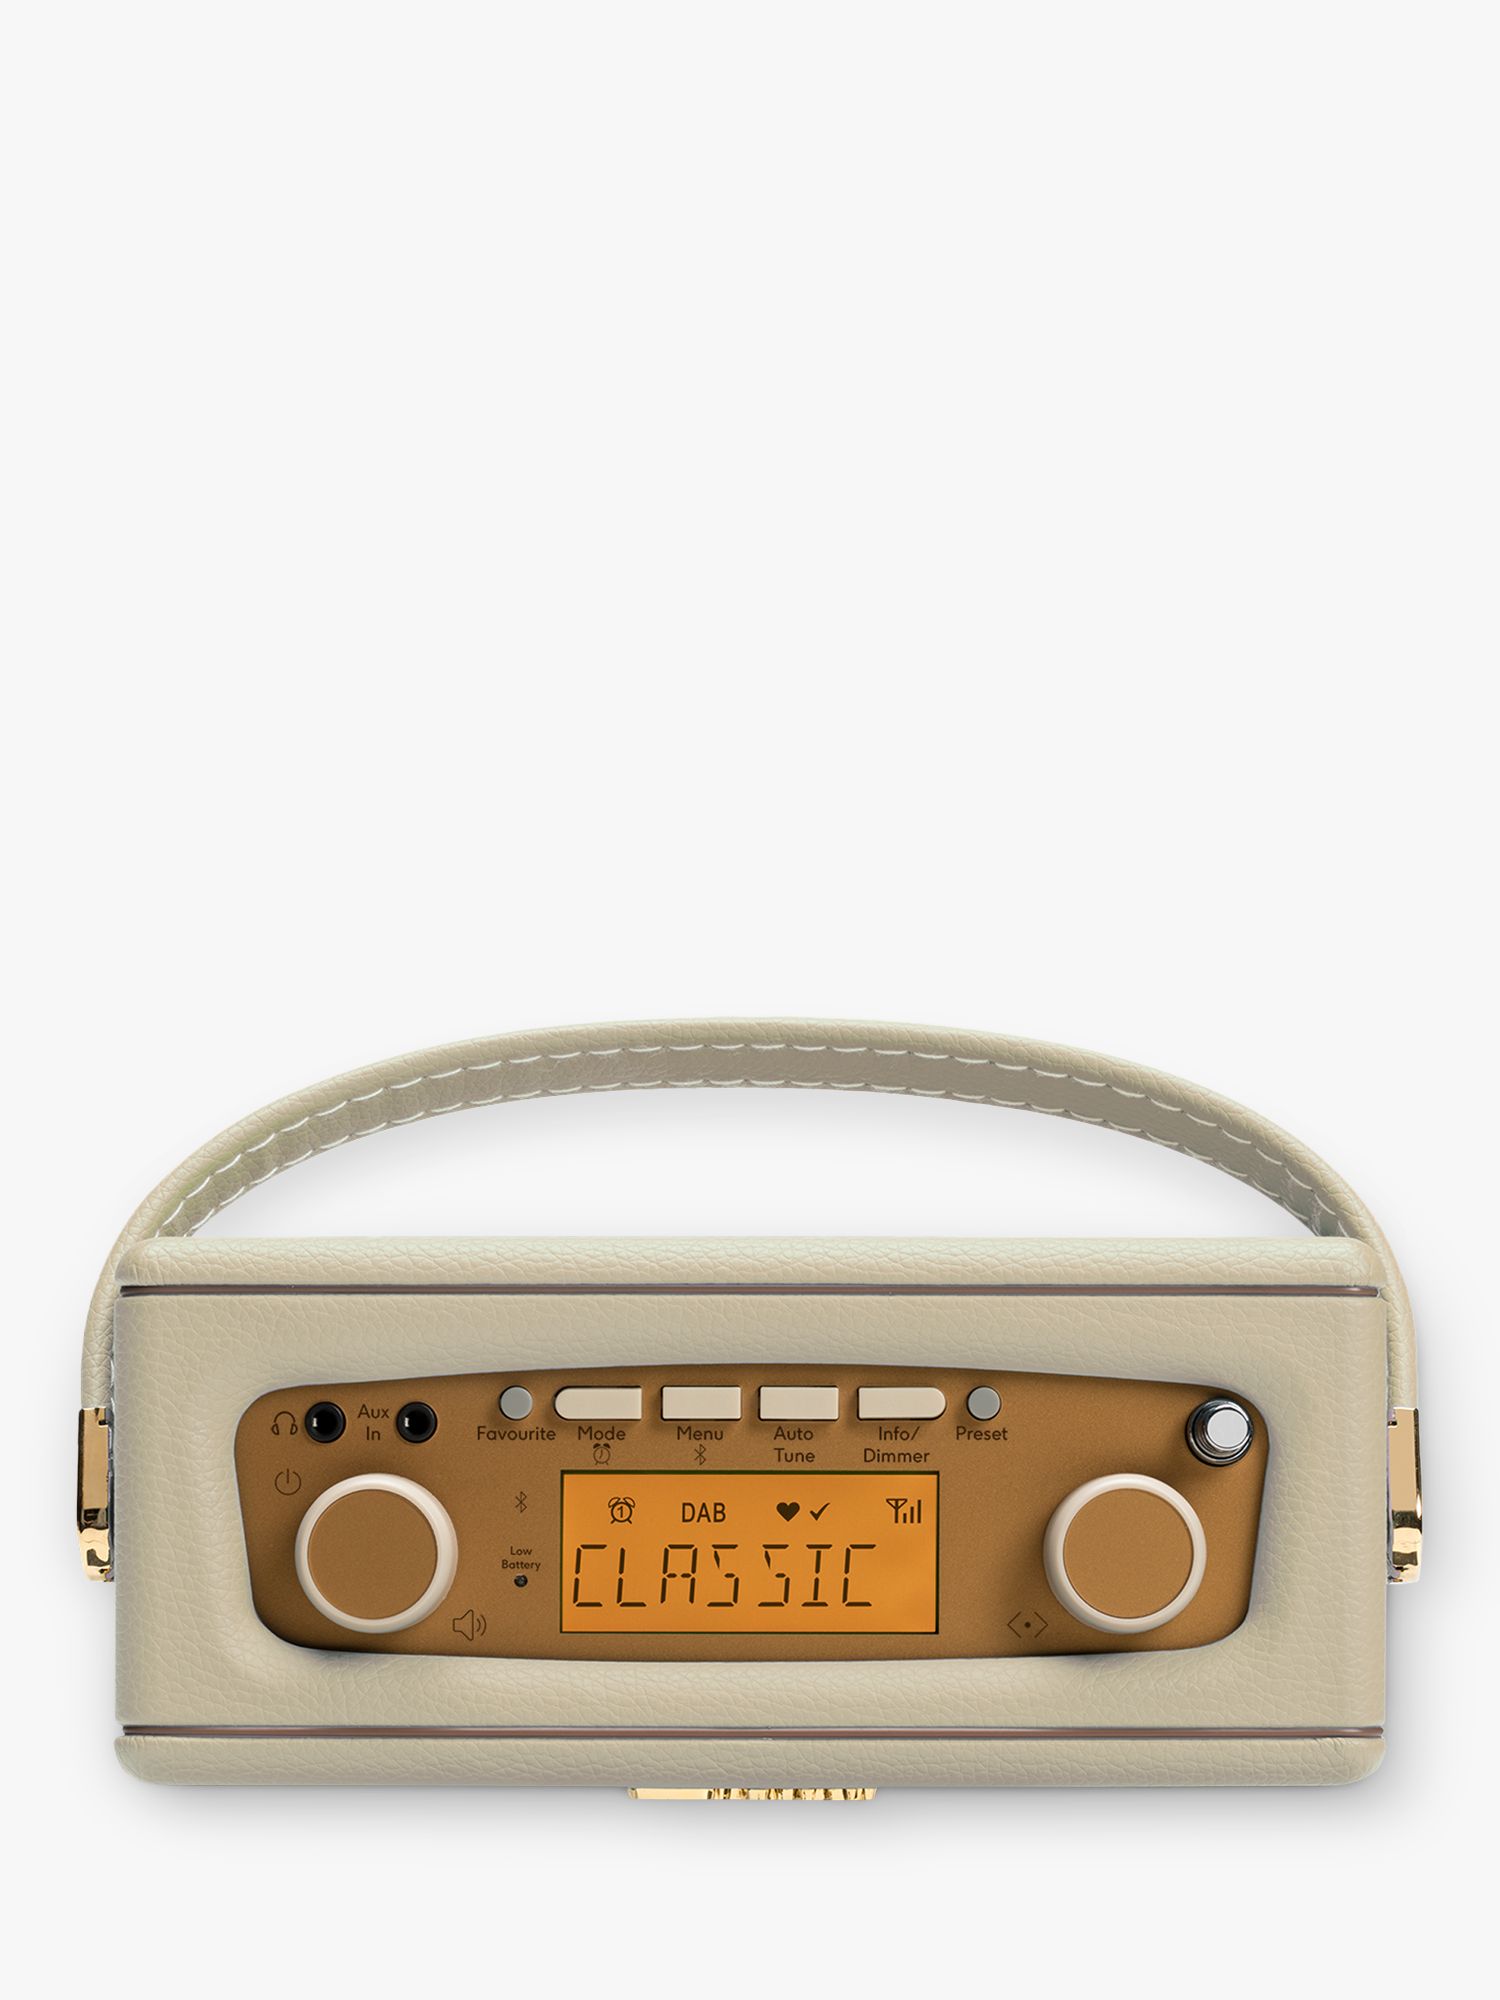 Roberts Revival Pastel Bluetooth Digital with Radio Uno DAB/DAB+/FM Alarm, Cream BT